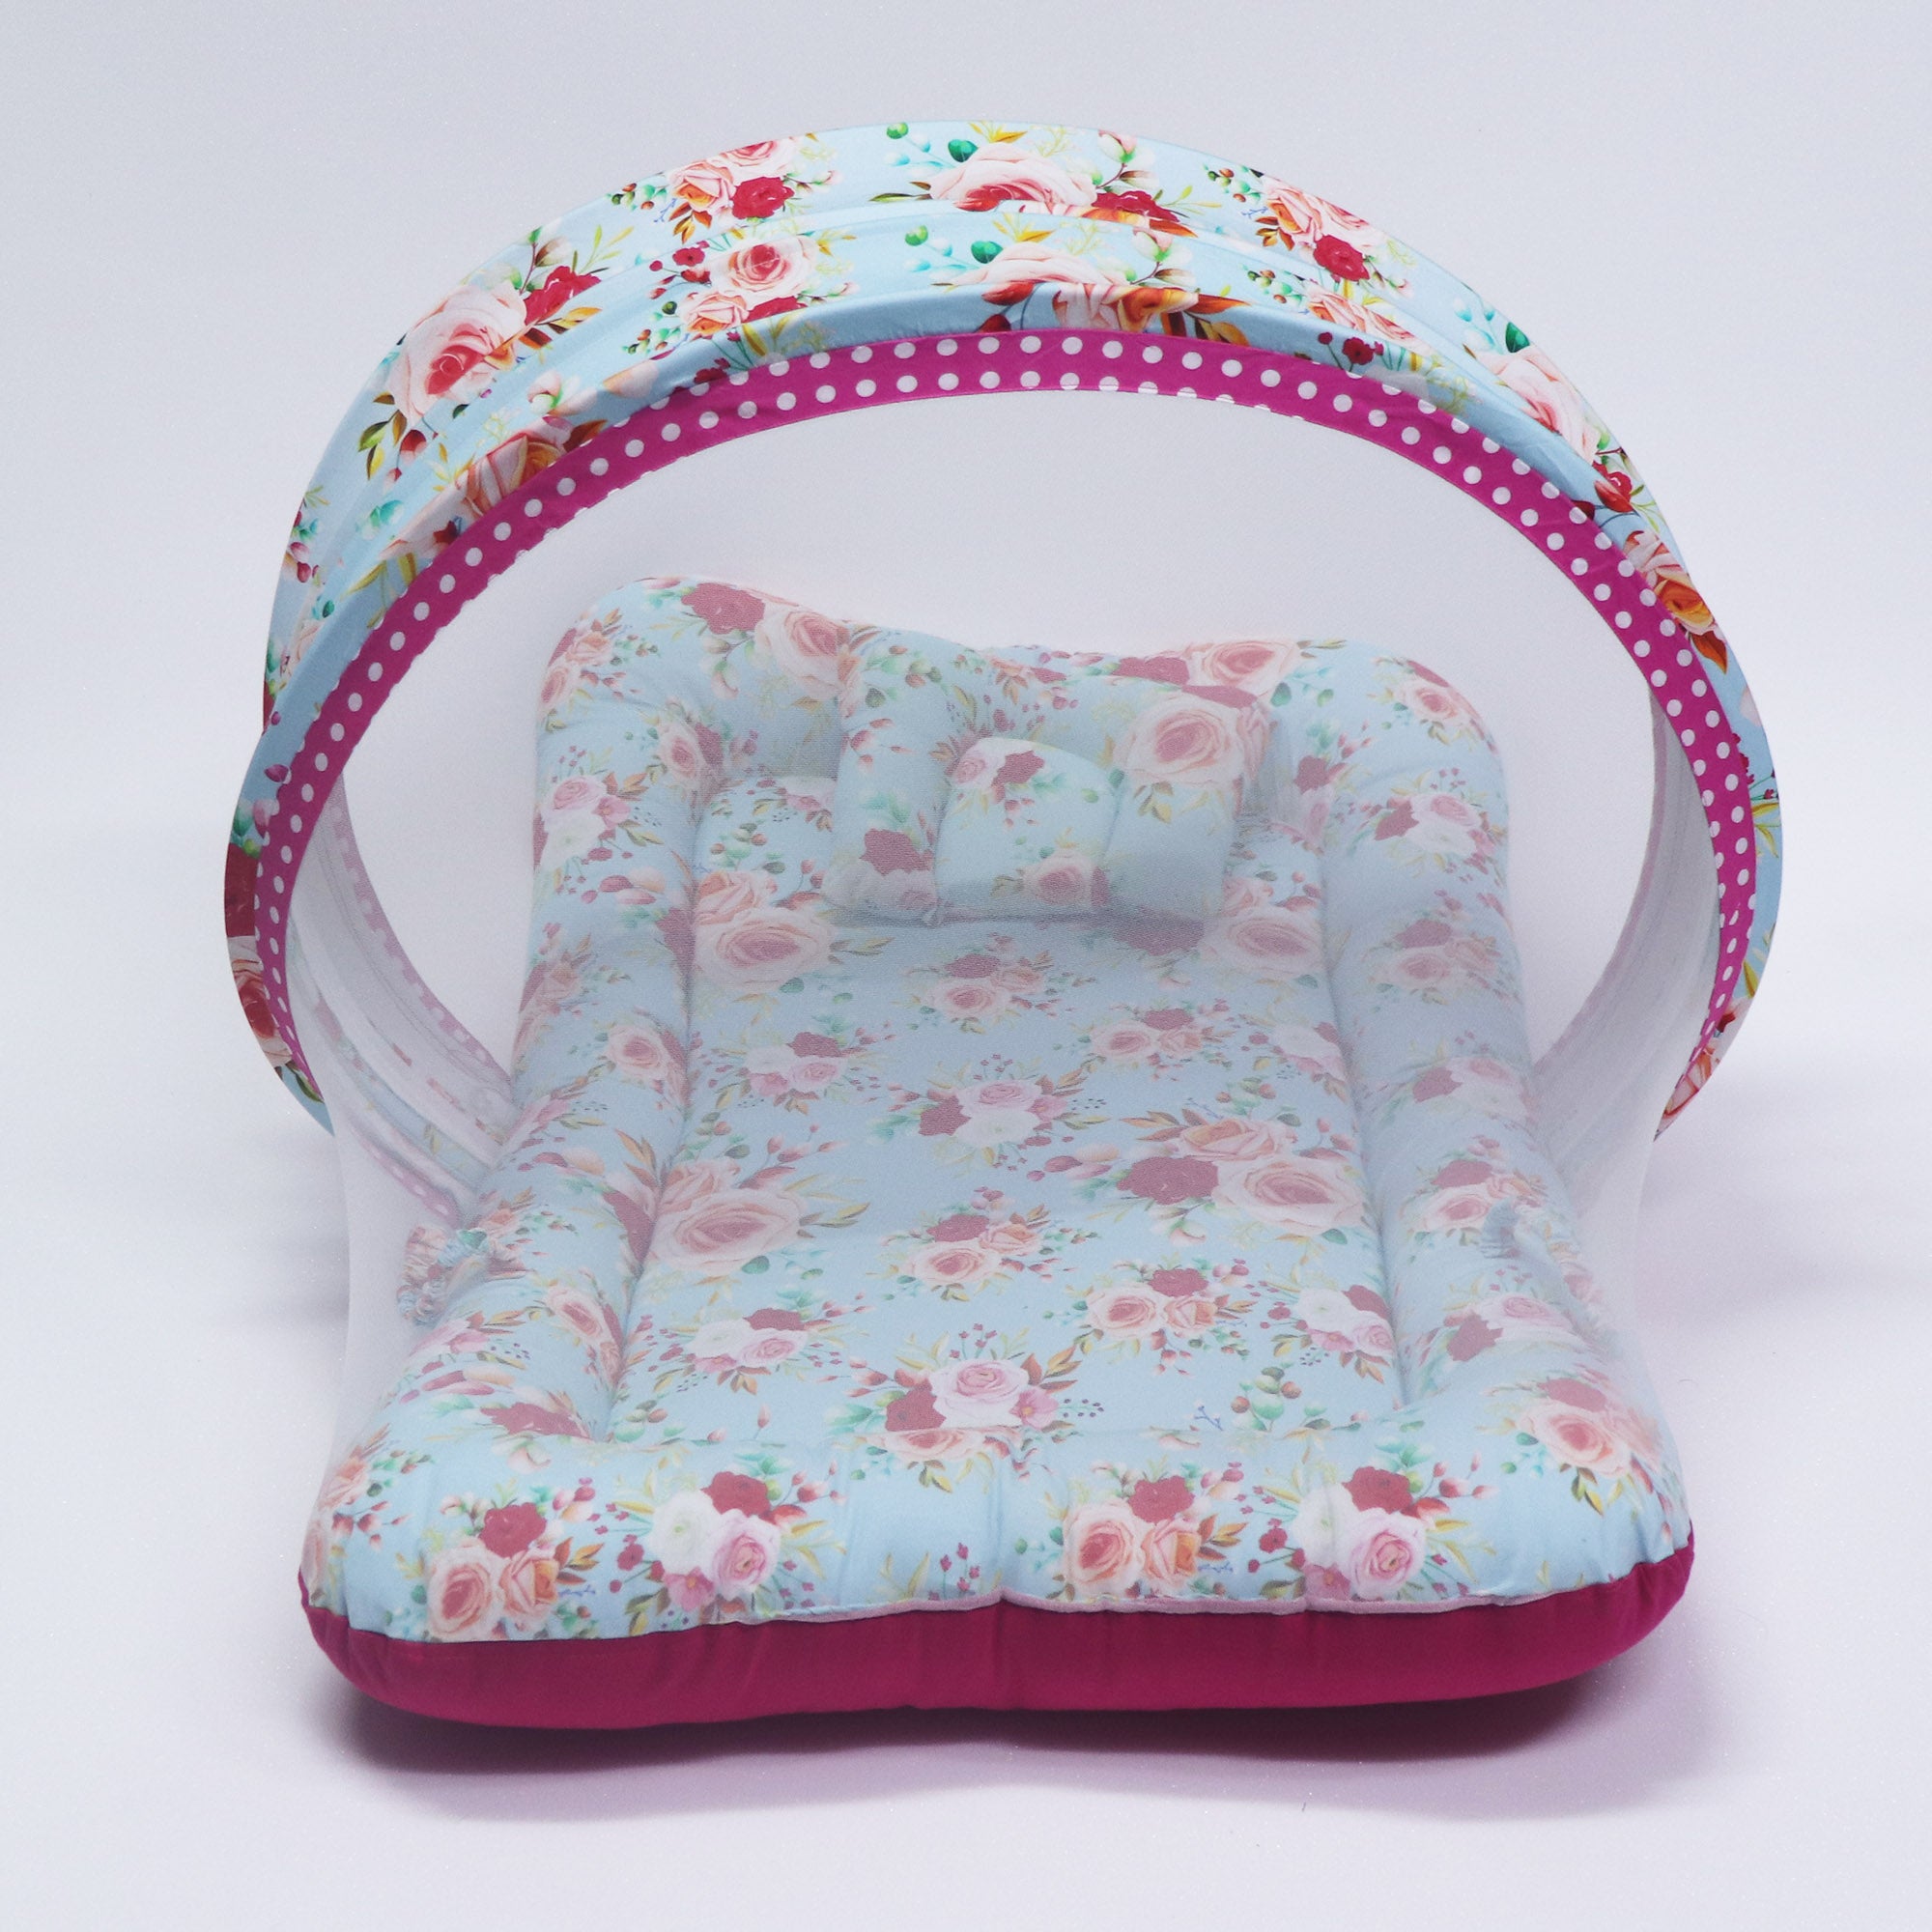 Floran -  Kradyl Kroft Bassinet Style Mosquito Net Bedding for Infants